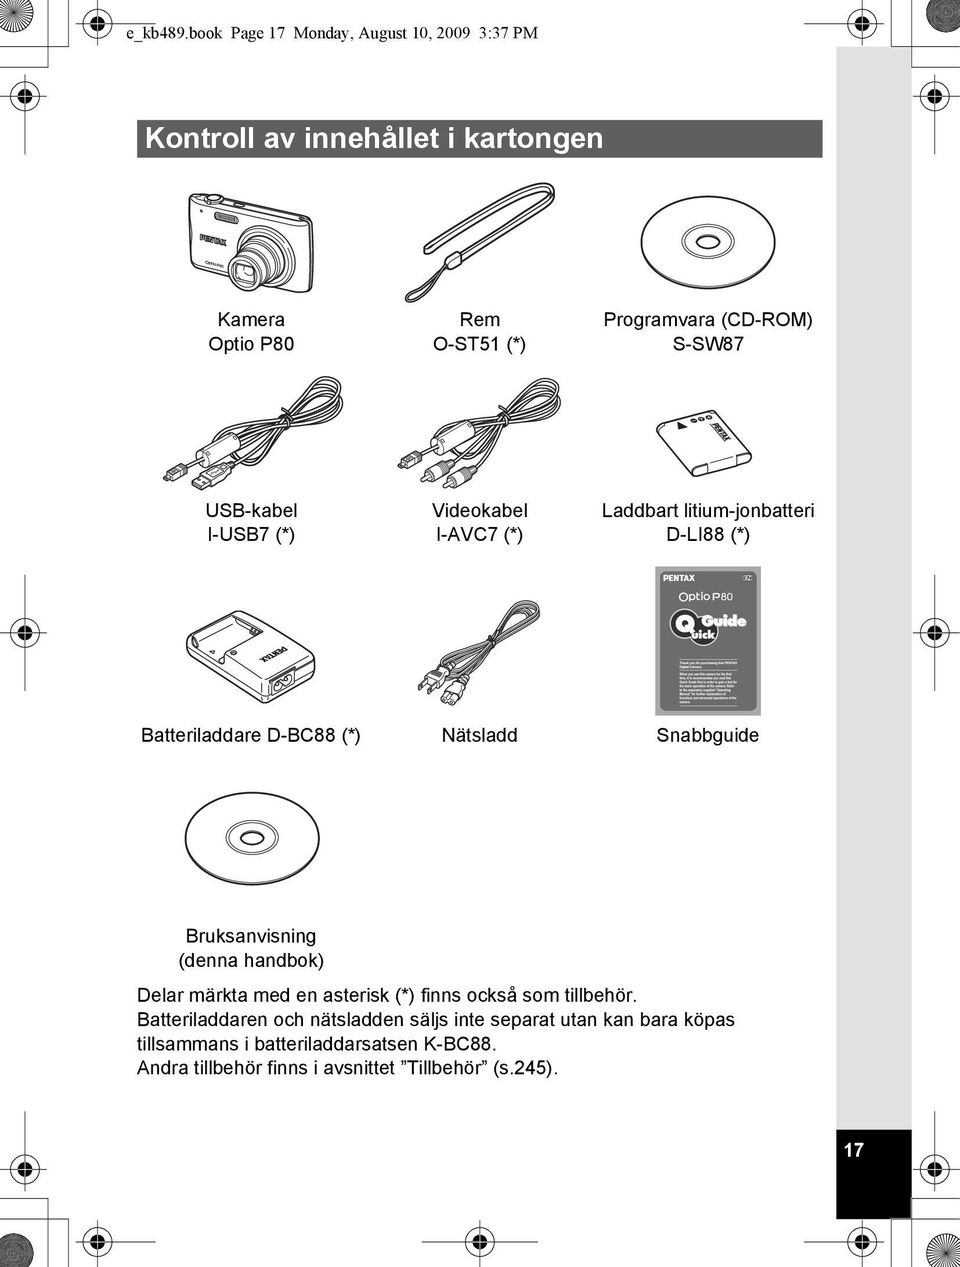 S-SW87 USB-kabel I-USB7 (*) Videokabel I-AVC7 (*) Laddbart litium-jonbatteri D-LI88 (*) Batteriladdare D-BC88 (*) Nätsladd Snabbguide